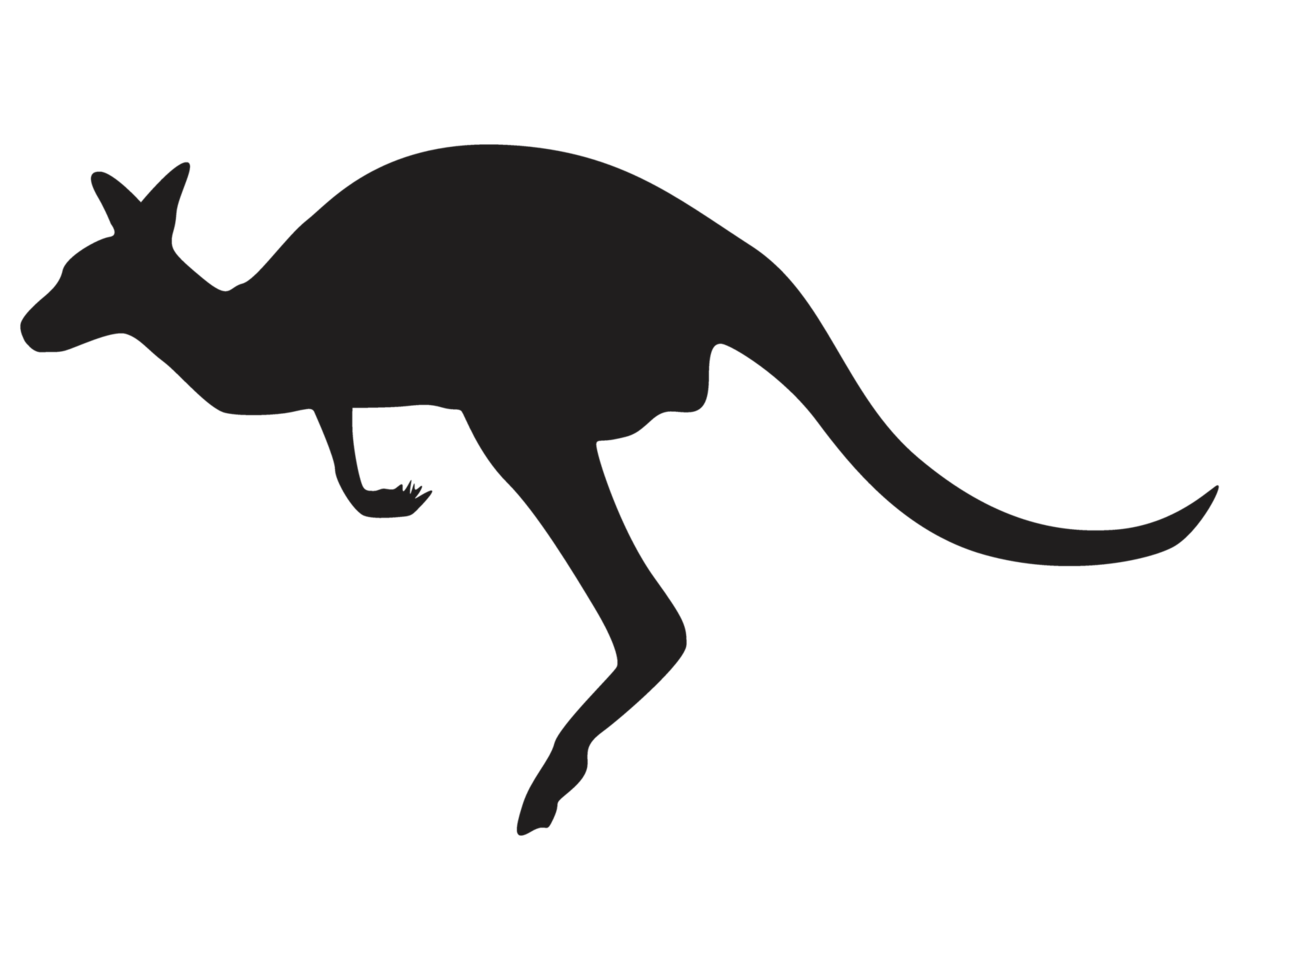 Animal - Kangaroo silhouette png